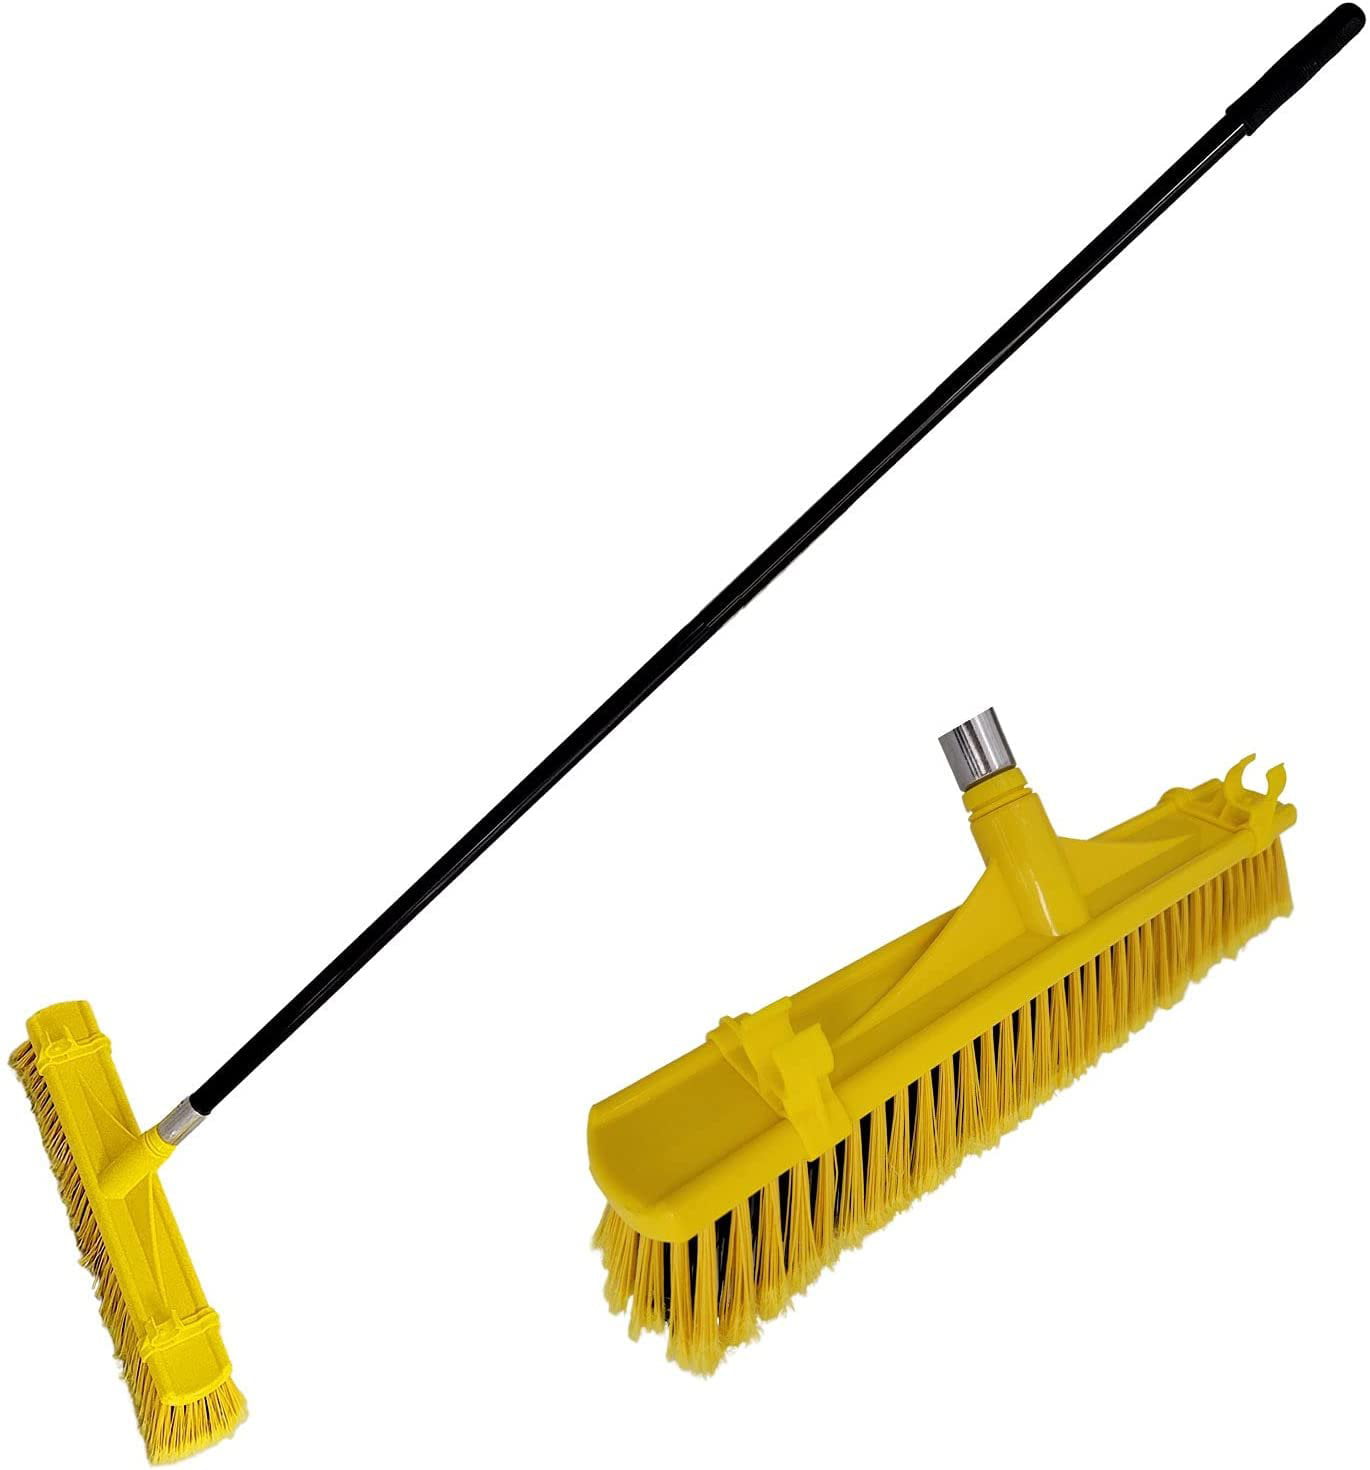 Stiff Garden Broom Head and Handle Heavy Duty Large Outdoor Sweeping Yard Brush 